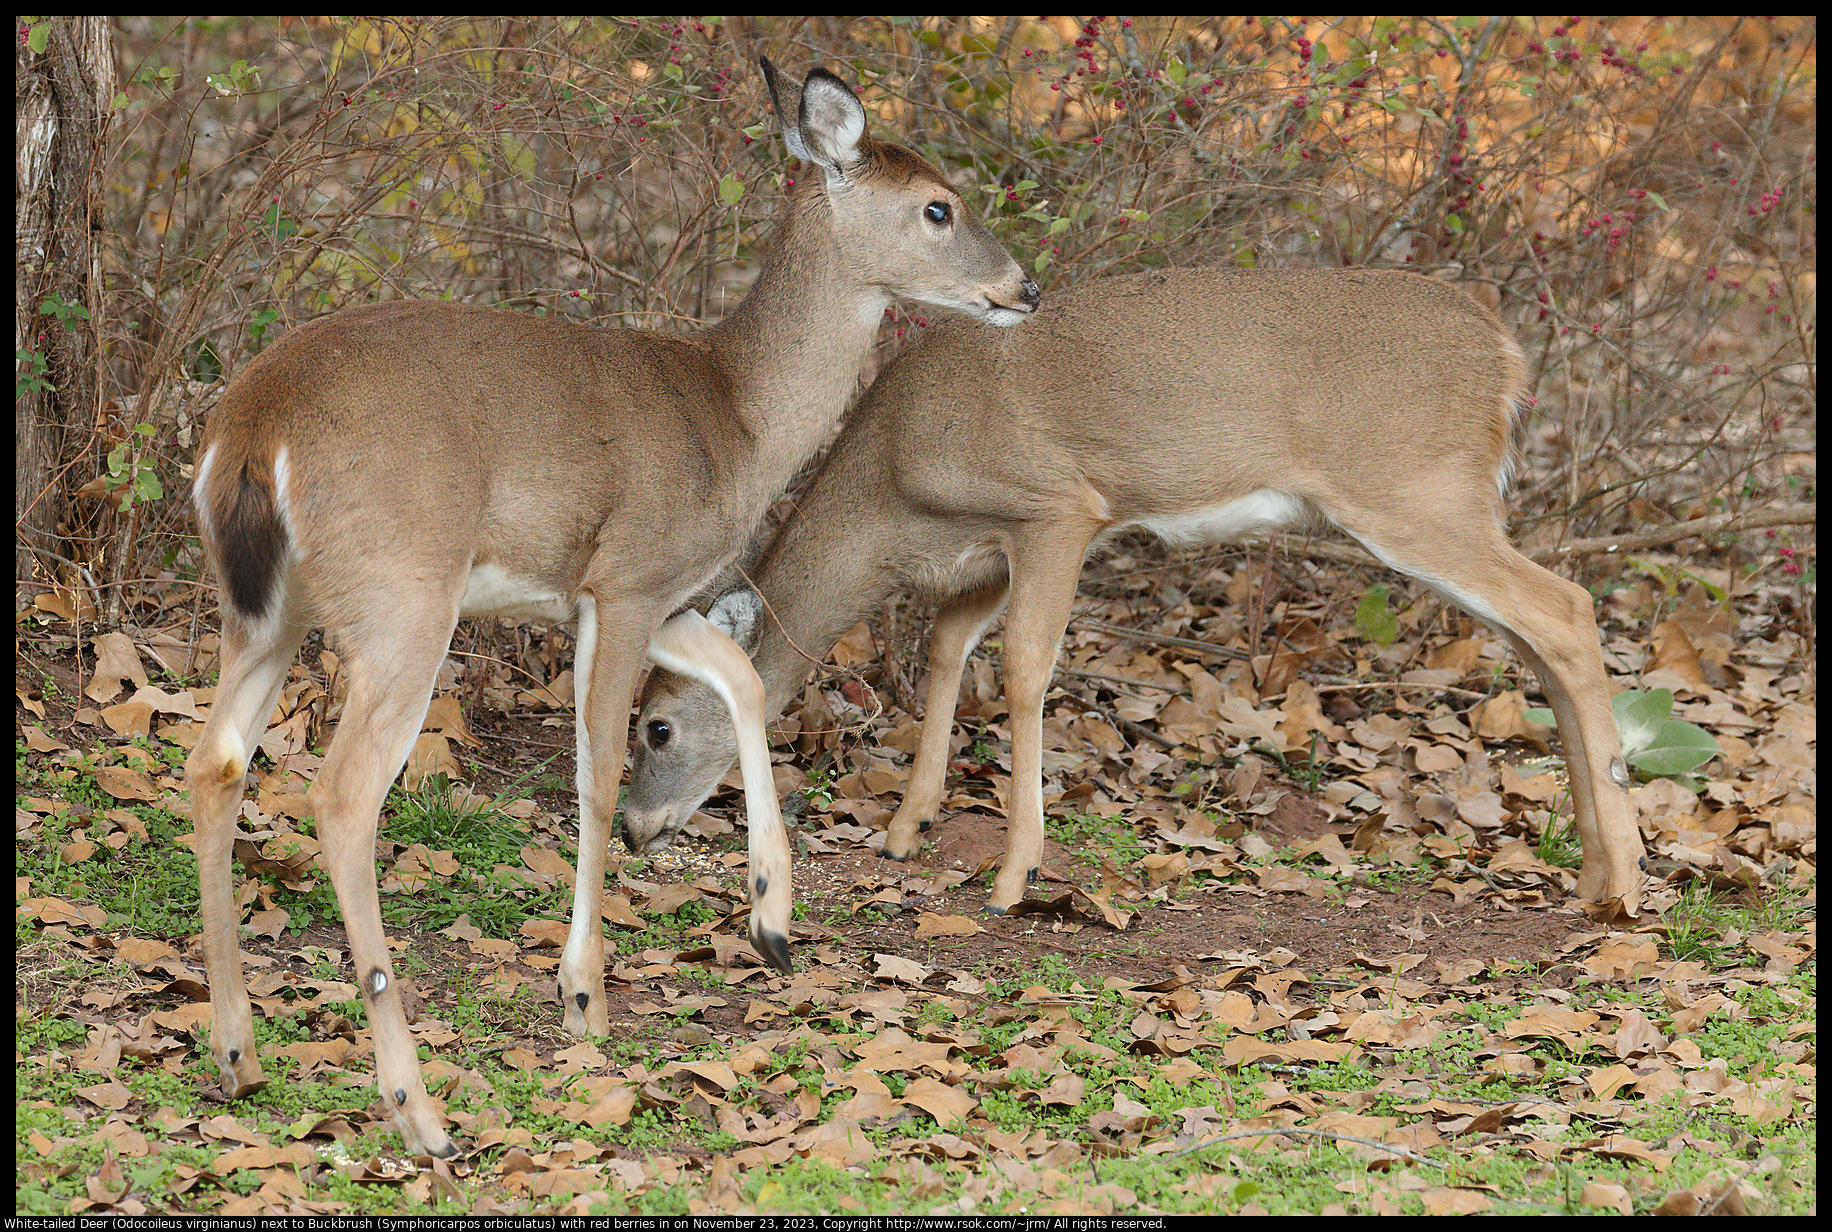 White-tailed Deer (Odocoileus virginianus) next to Buckbrush (Symphoricarpos orbiculatus) with red berries in Norman, Oklahoma, United States on November 23, 2023